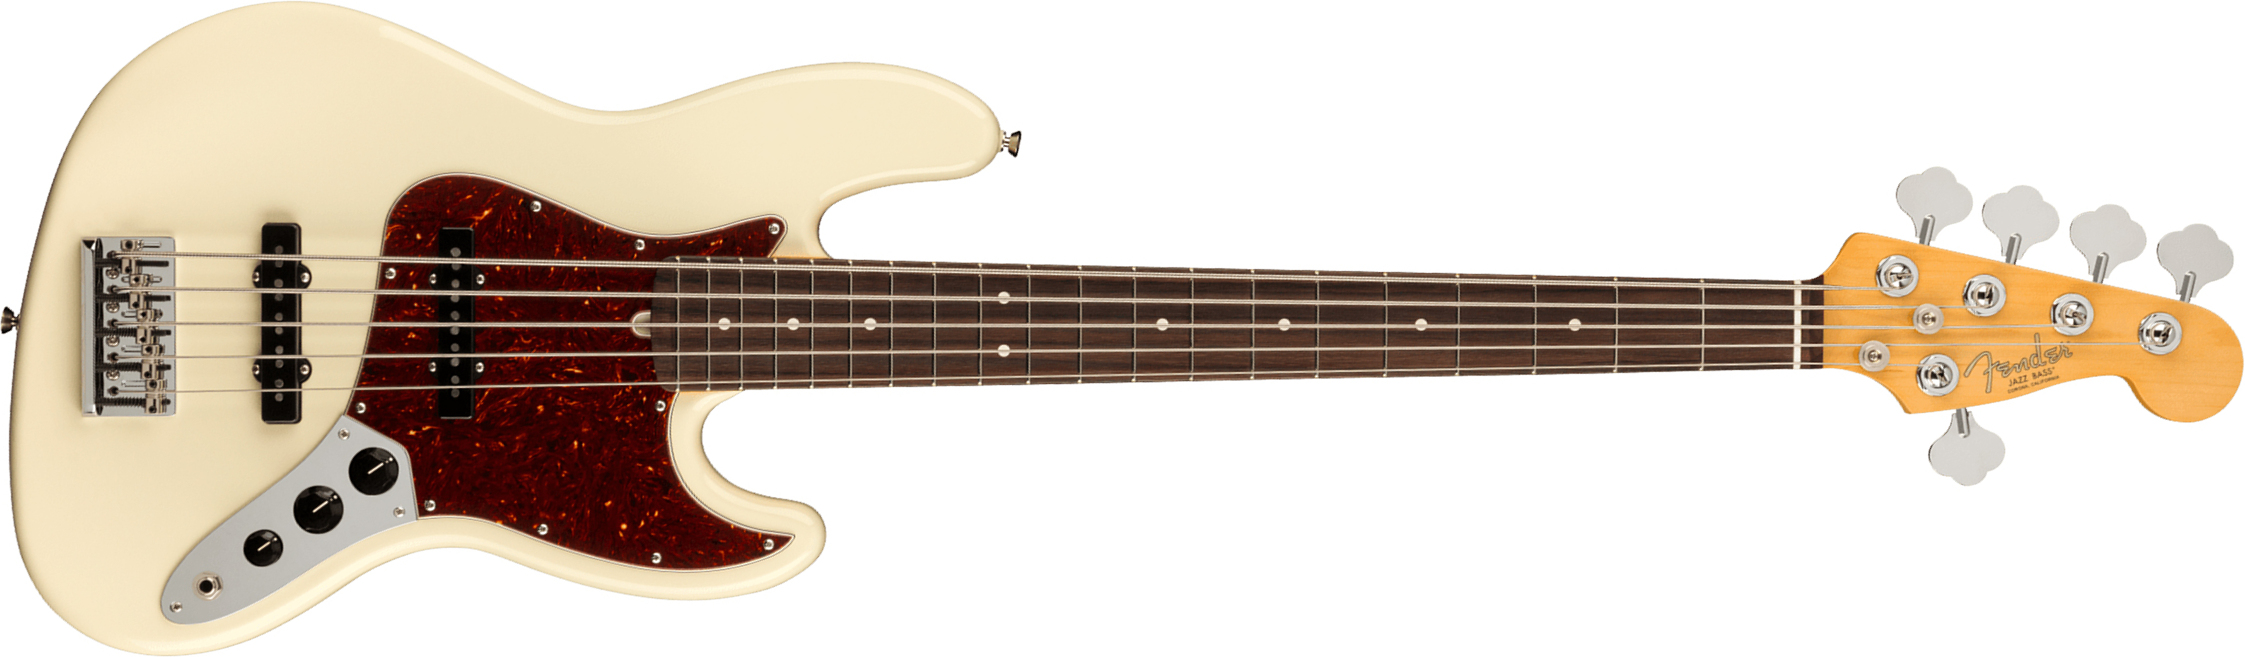 Fender Jazz Bass V American Professional Ii Usa 5-cordes Rw - Olympic White - Bajo eléctrico de cuerpo sólido - Main picture